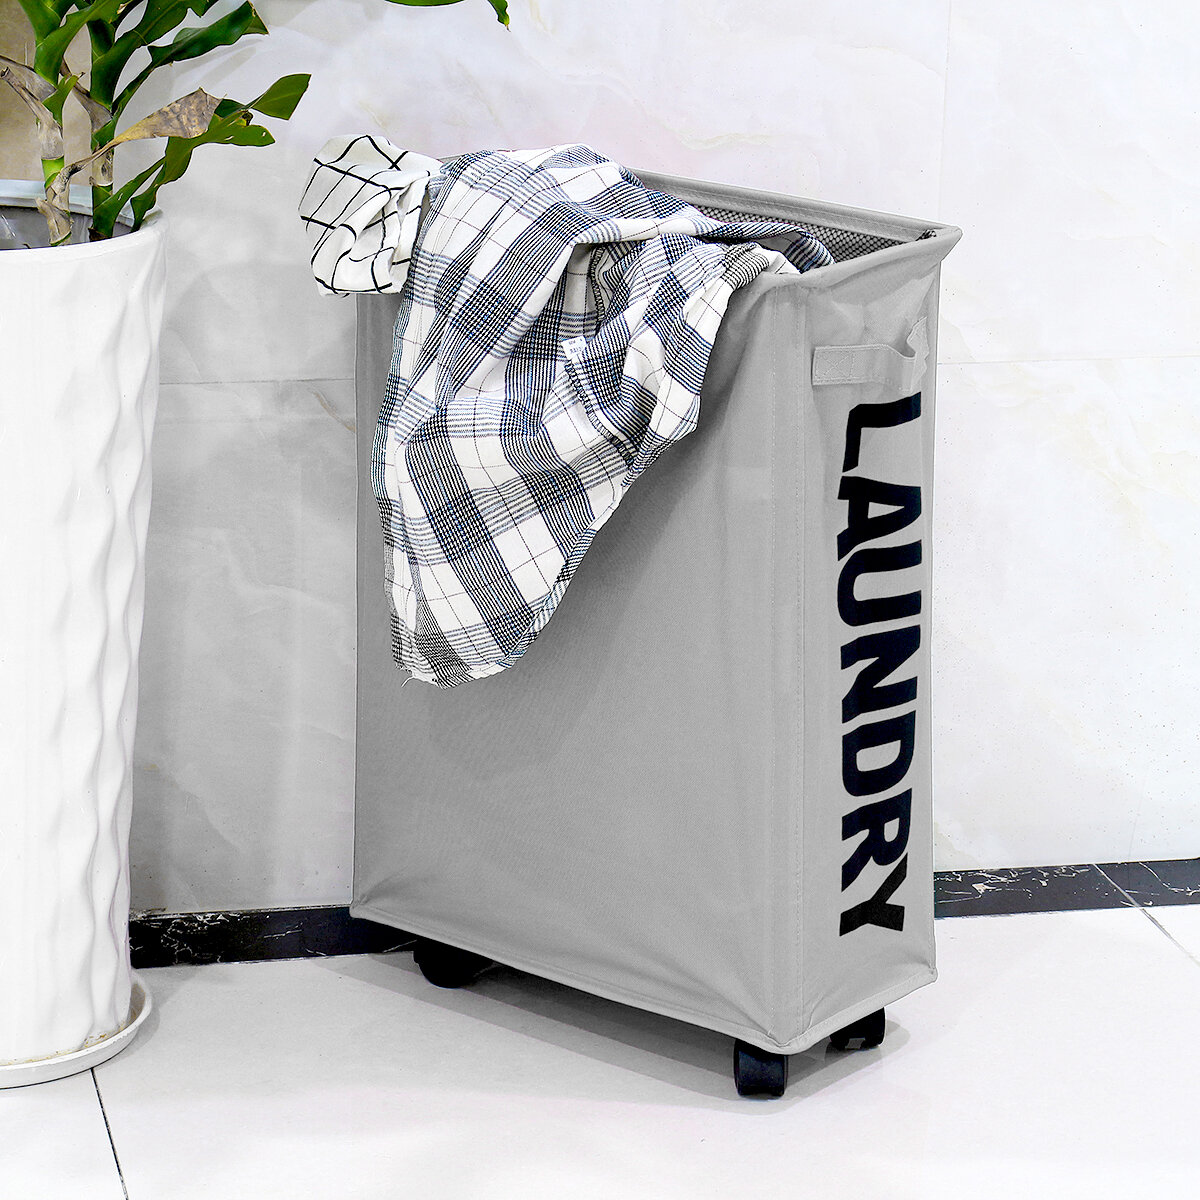 IHOMAGIC Laundry Basket Hamper Dirt Washing Clothes Storage Organizer With Wheel Portable